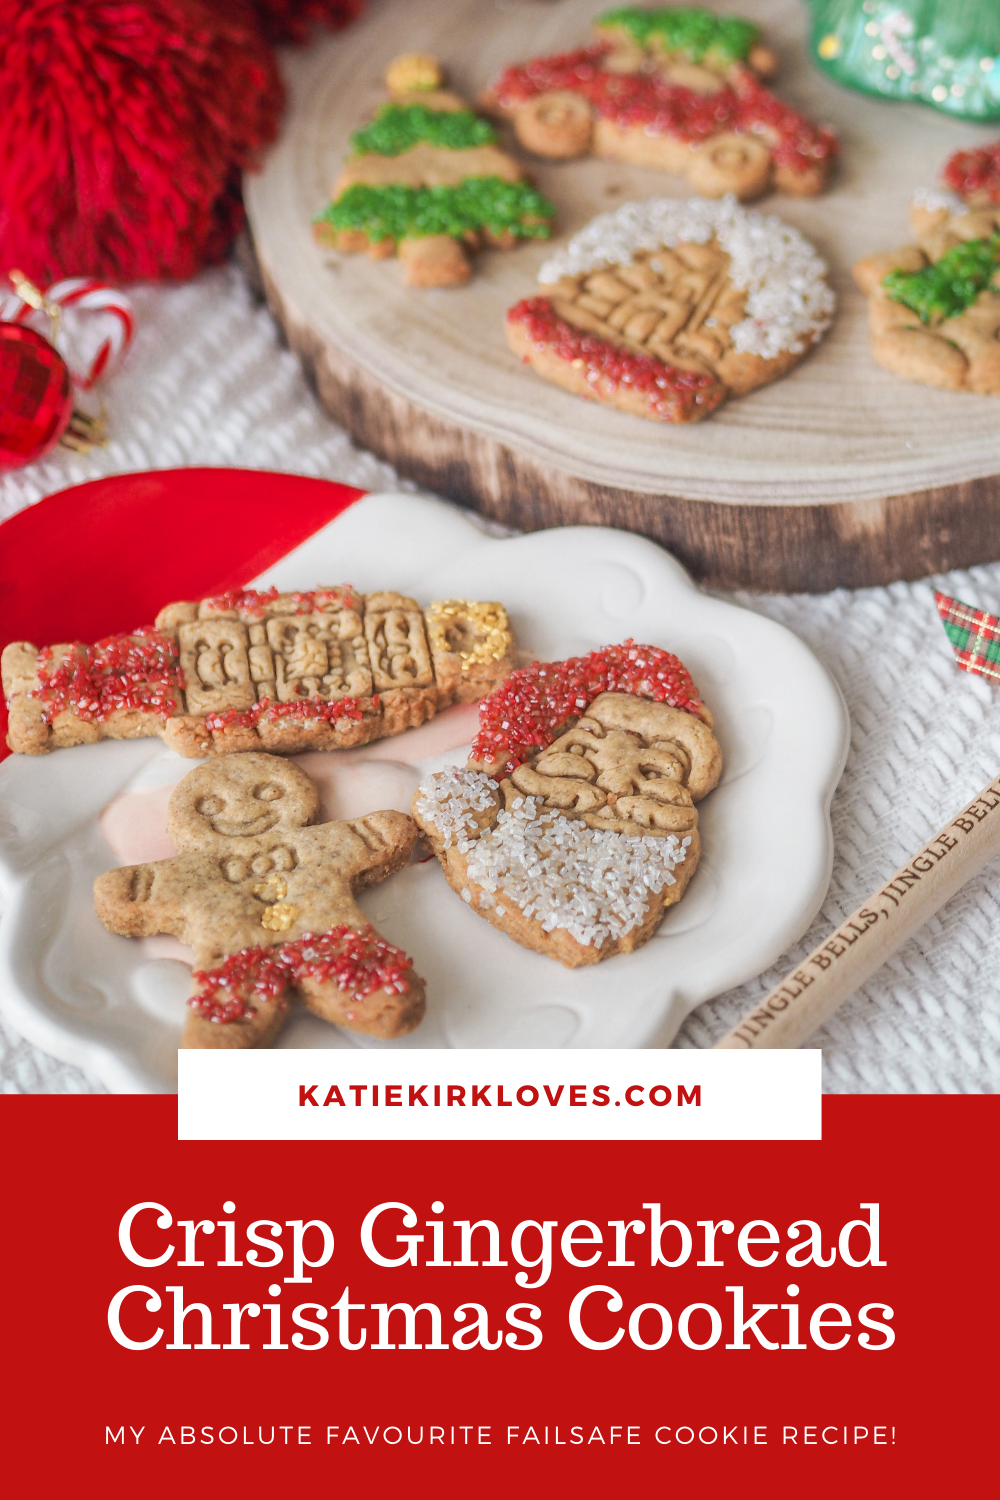 Pin it! Crisp Gingerbread Christmas Cookies, Food Blogger, Katie Kirk Loves, UK Blogger, Christmas Recipe, Christmas Baking, Homemade Christmas Gifts, Home Baking, UK Baking Blog, UK Recipe, Christmas Cookies, Gingerbread Cookies